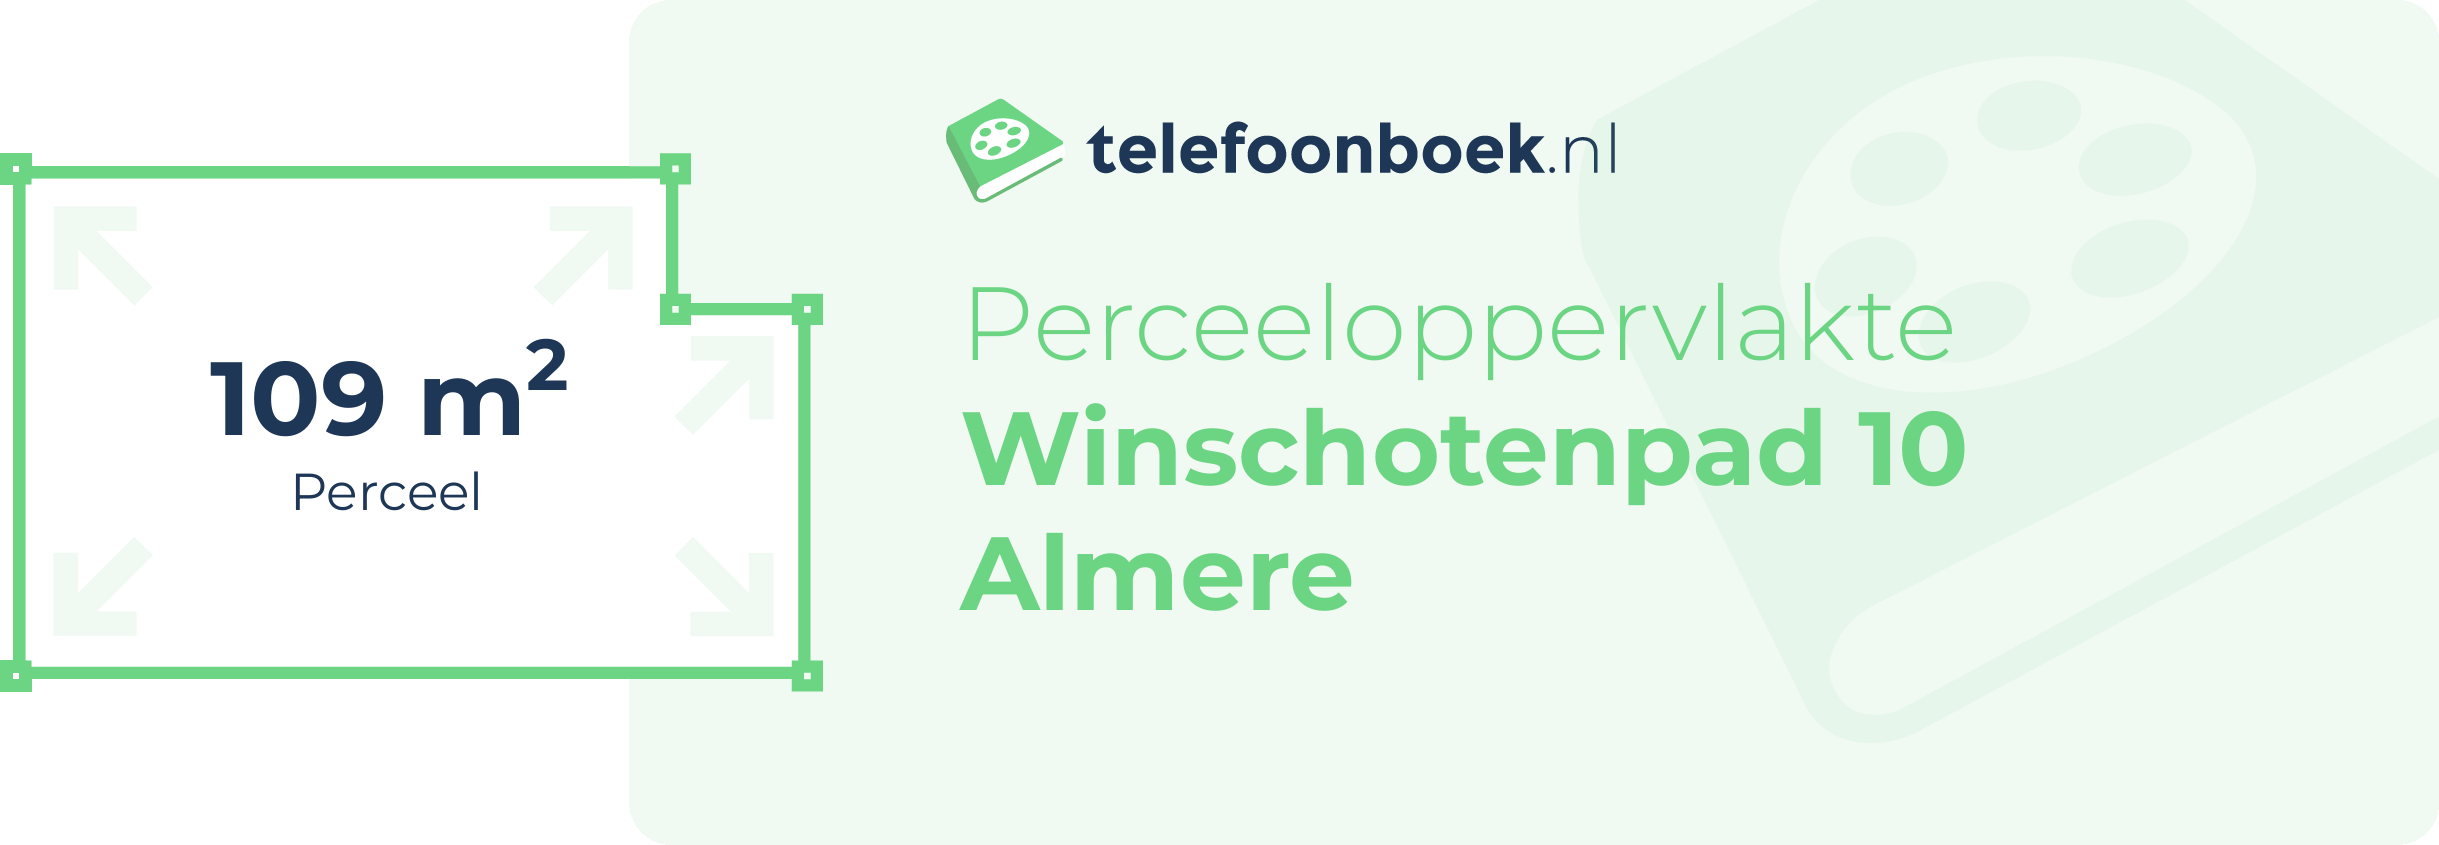 Perceeloppervlakte Winschotenpad 10 Almere